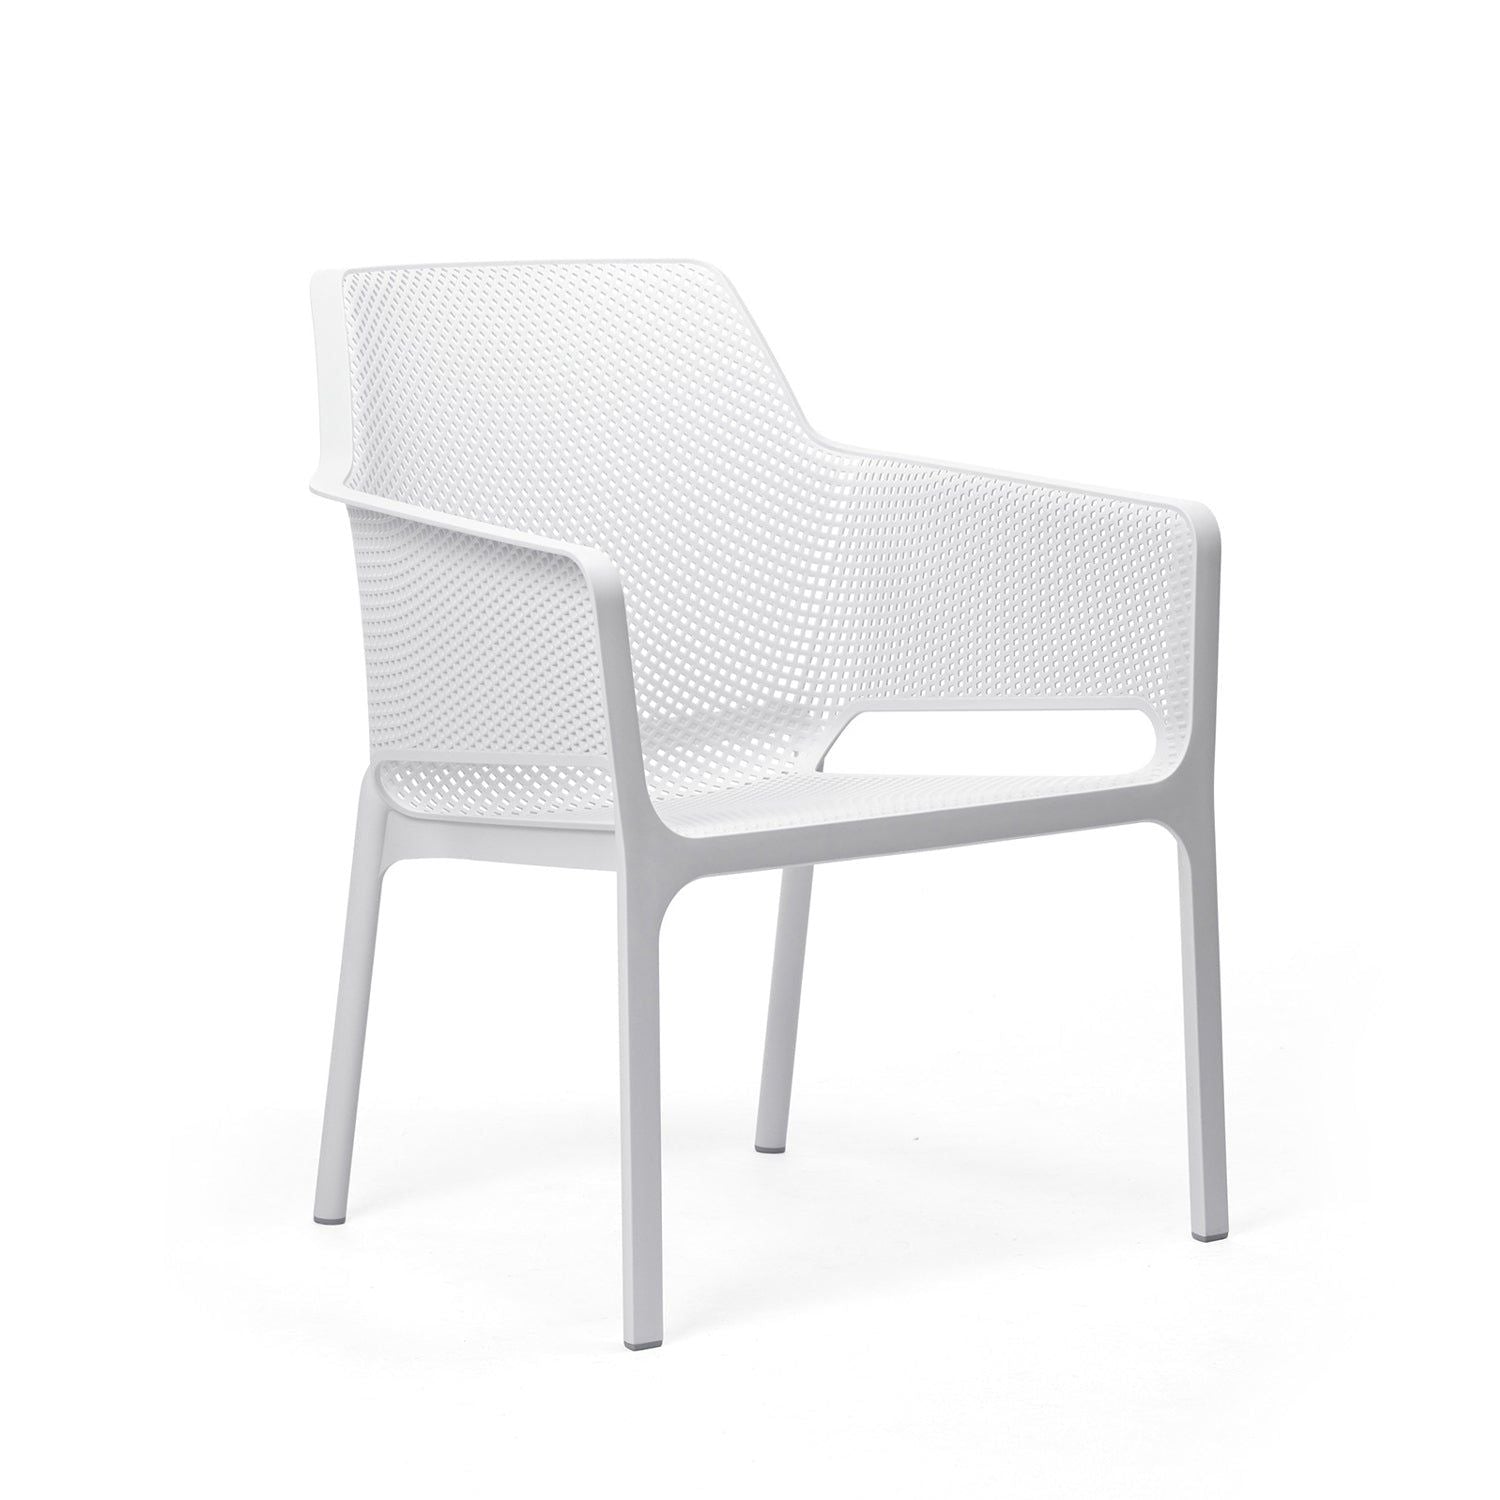 Net Relax Garden Chair By Nardi - Set Of 6 - White